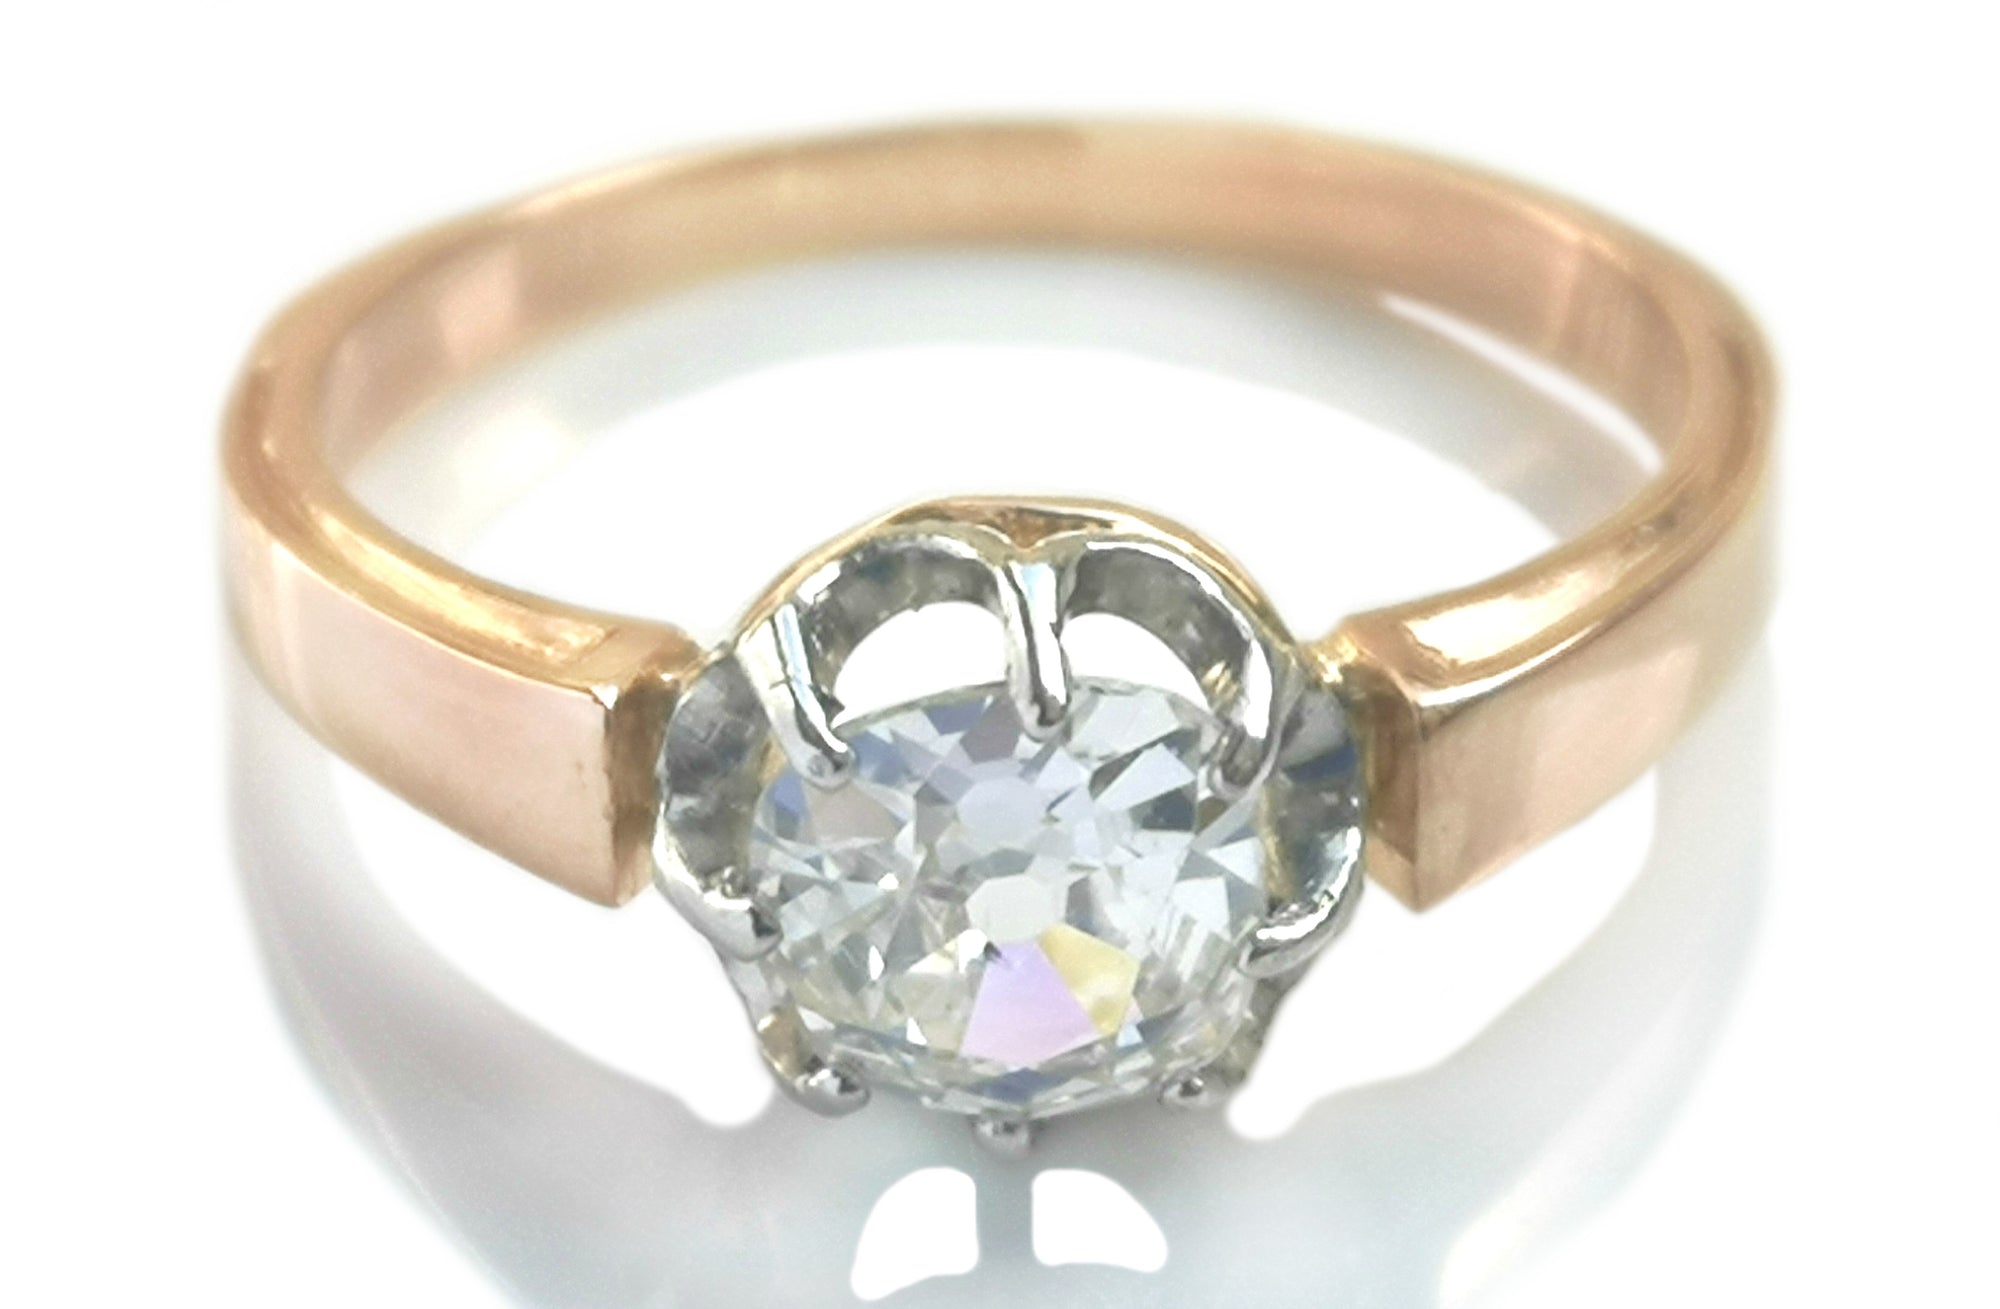 Antique Old Mine Cut .75ct Diamond 18k Rose Gold Engagement Ring SZ L